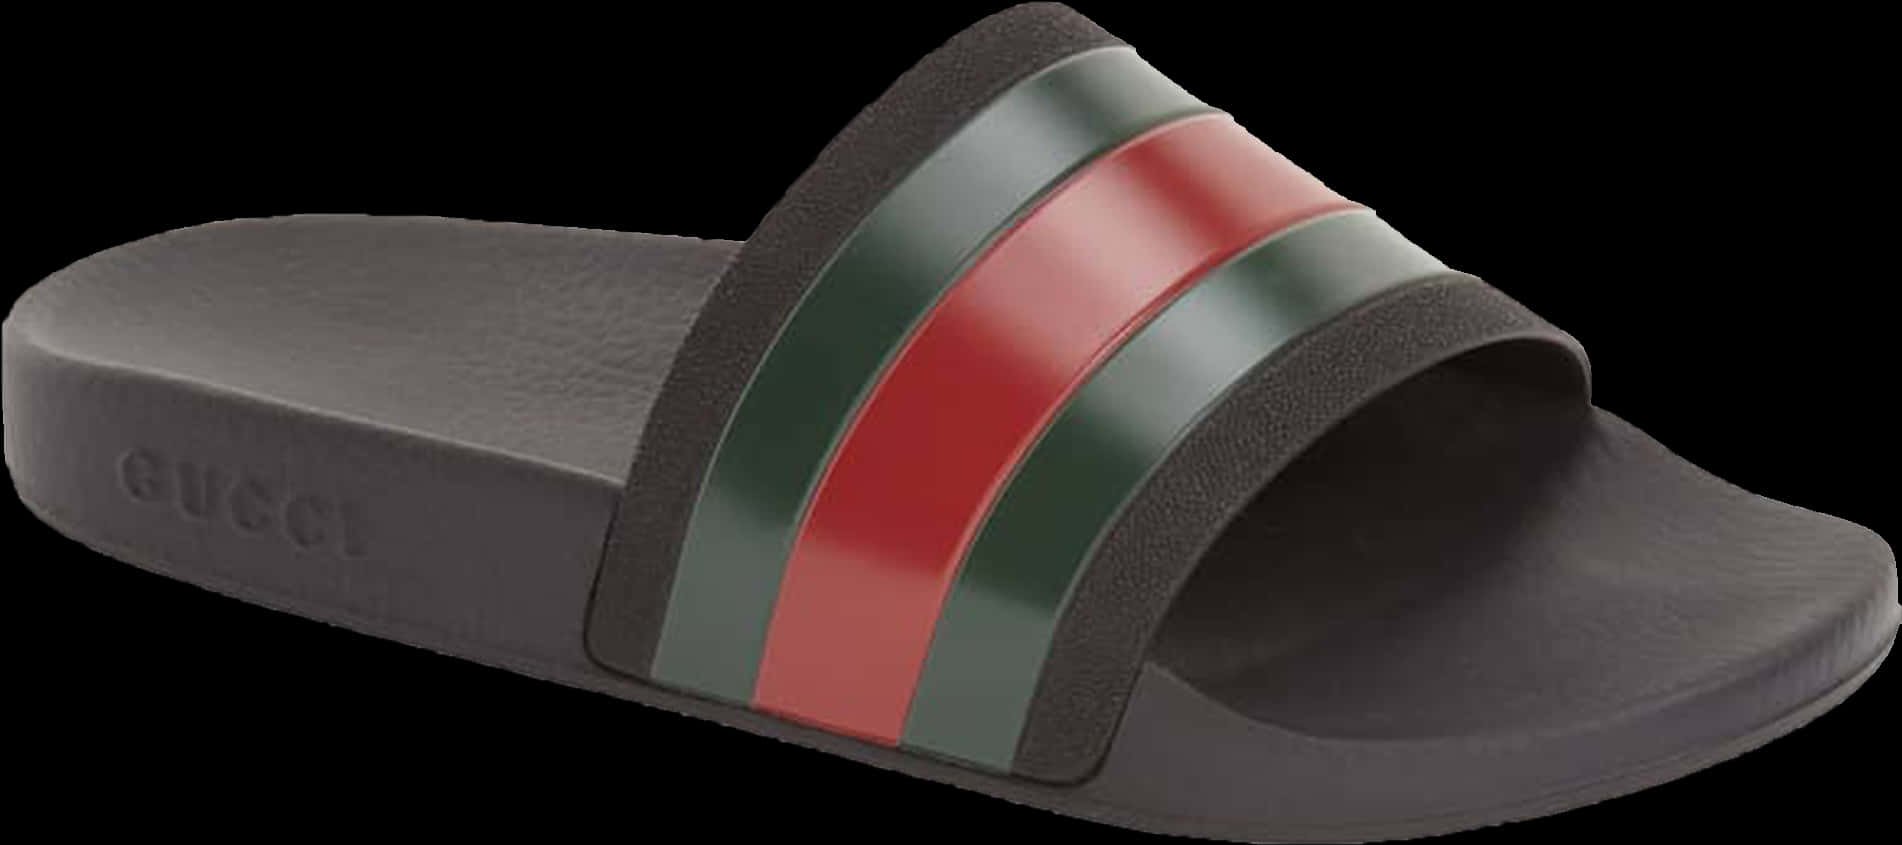 Gucci Striped Rubber Slide Sandal PNG